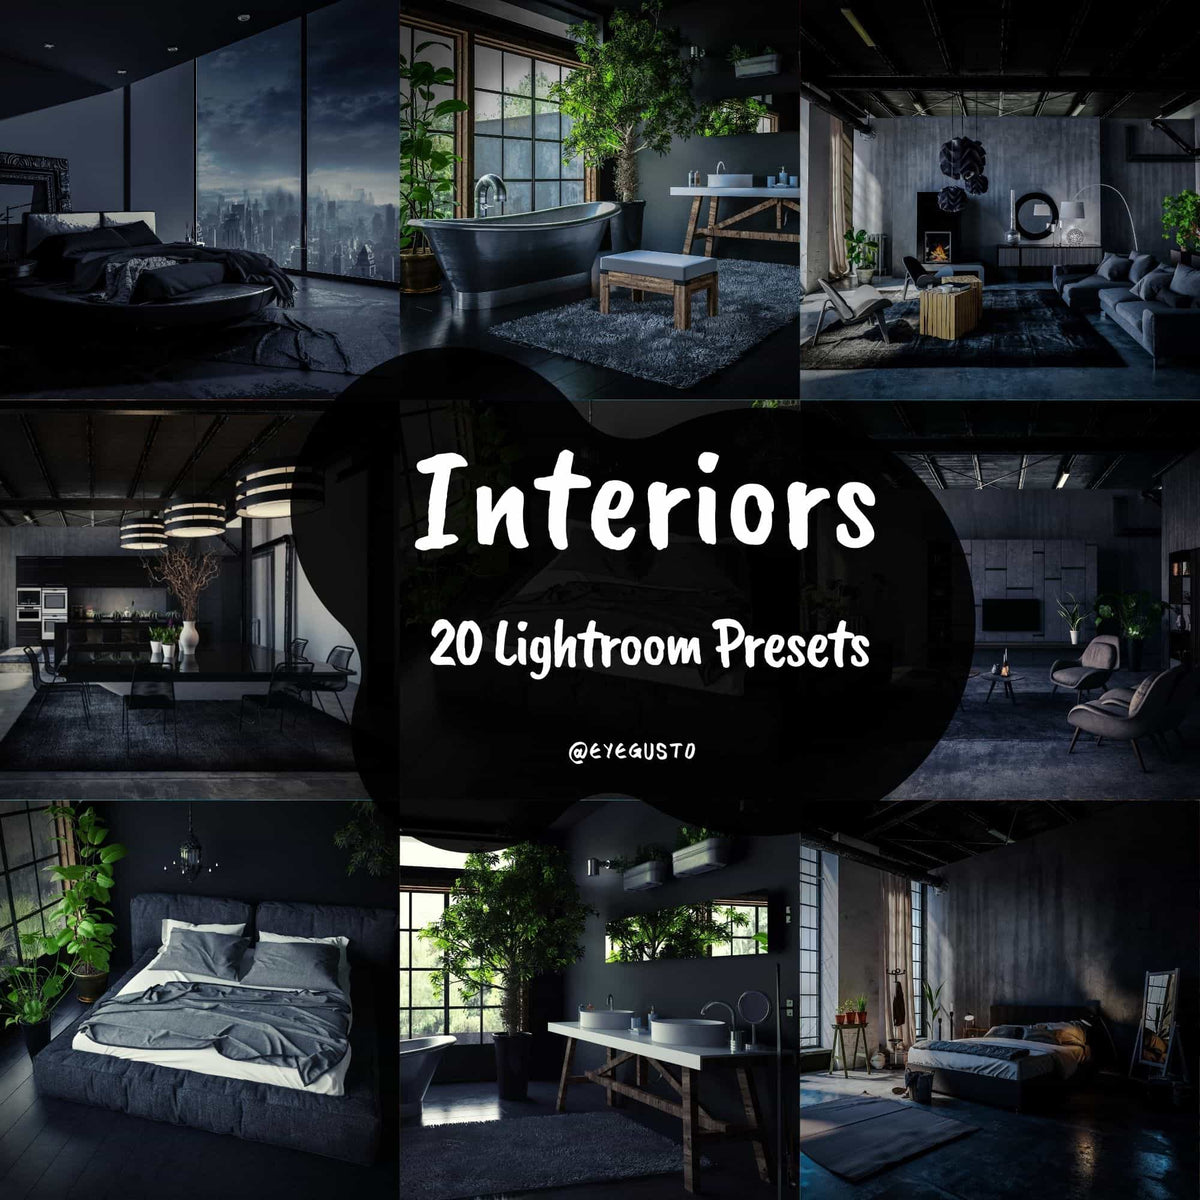 75 Real Estate Lightroom Presets Ultimate Collection